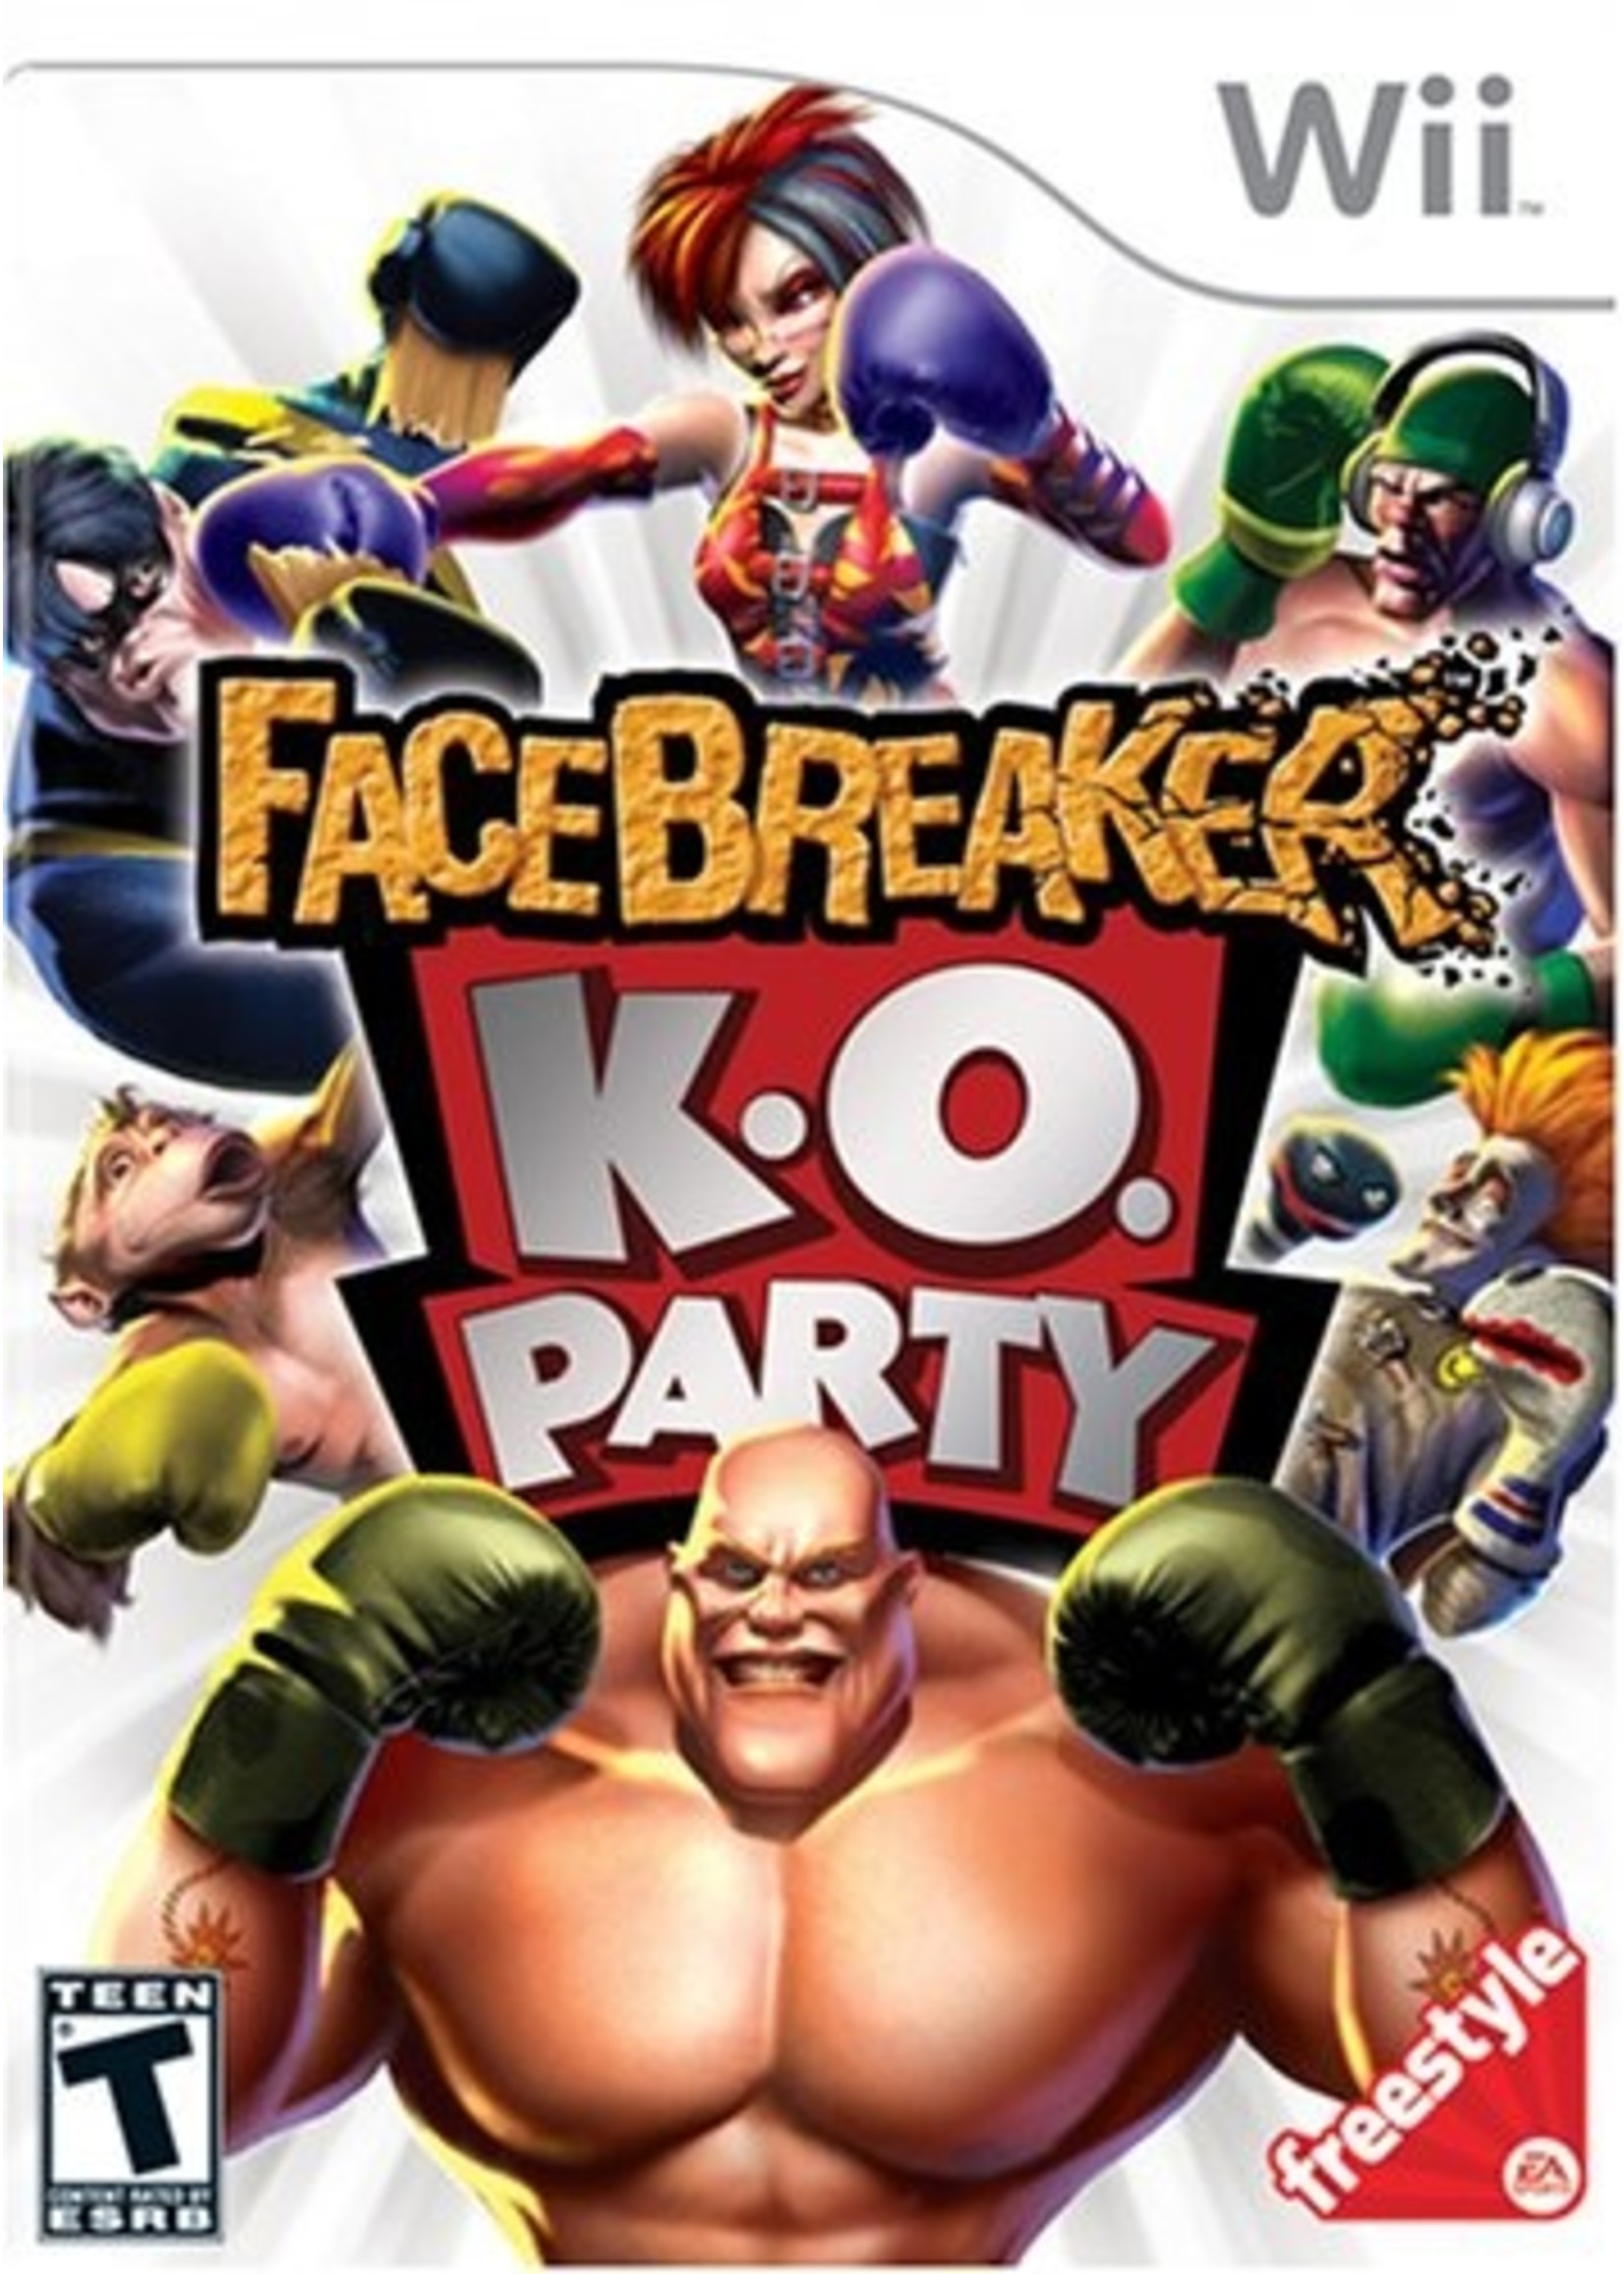 Nintendo Wii FaceBreaker K.O. Party